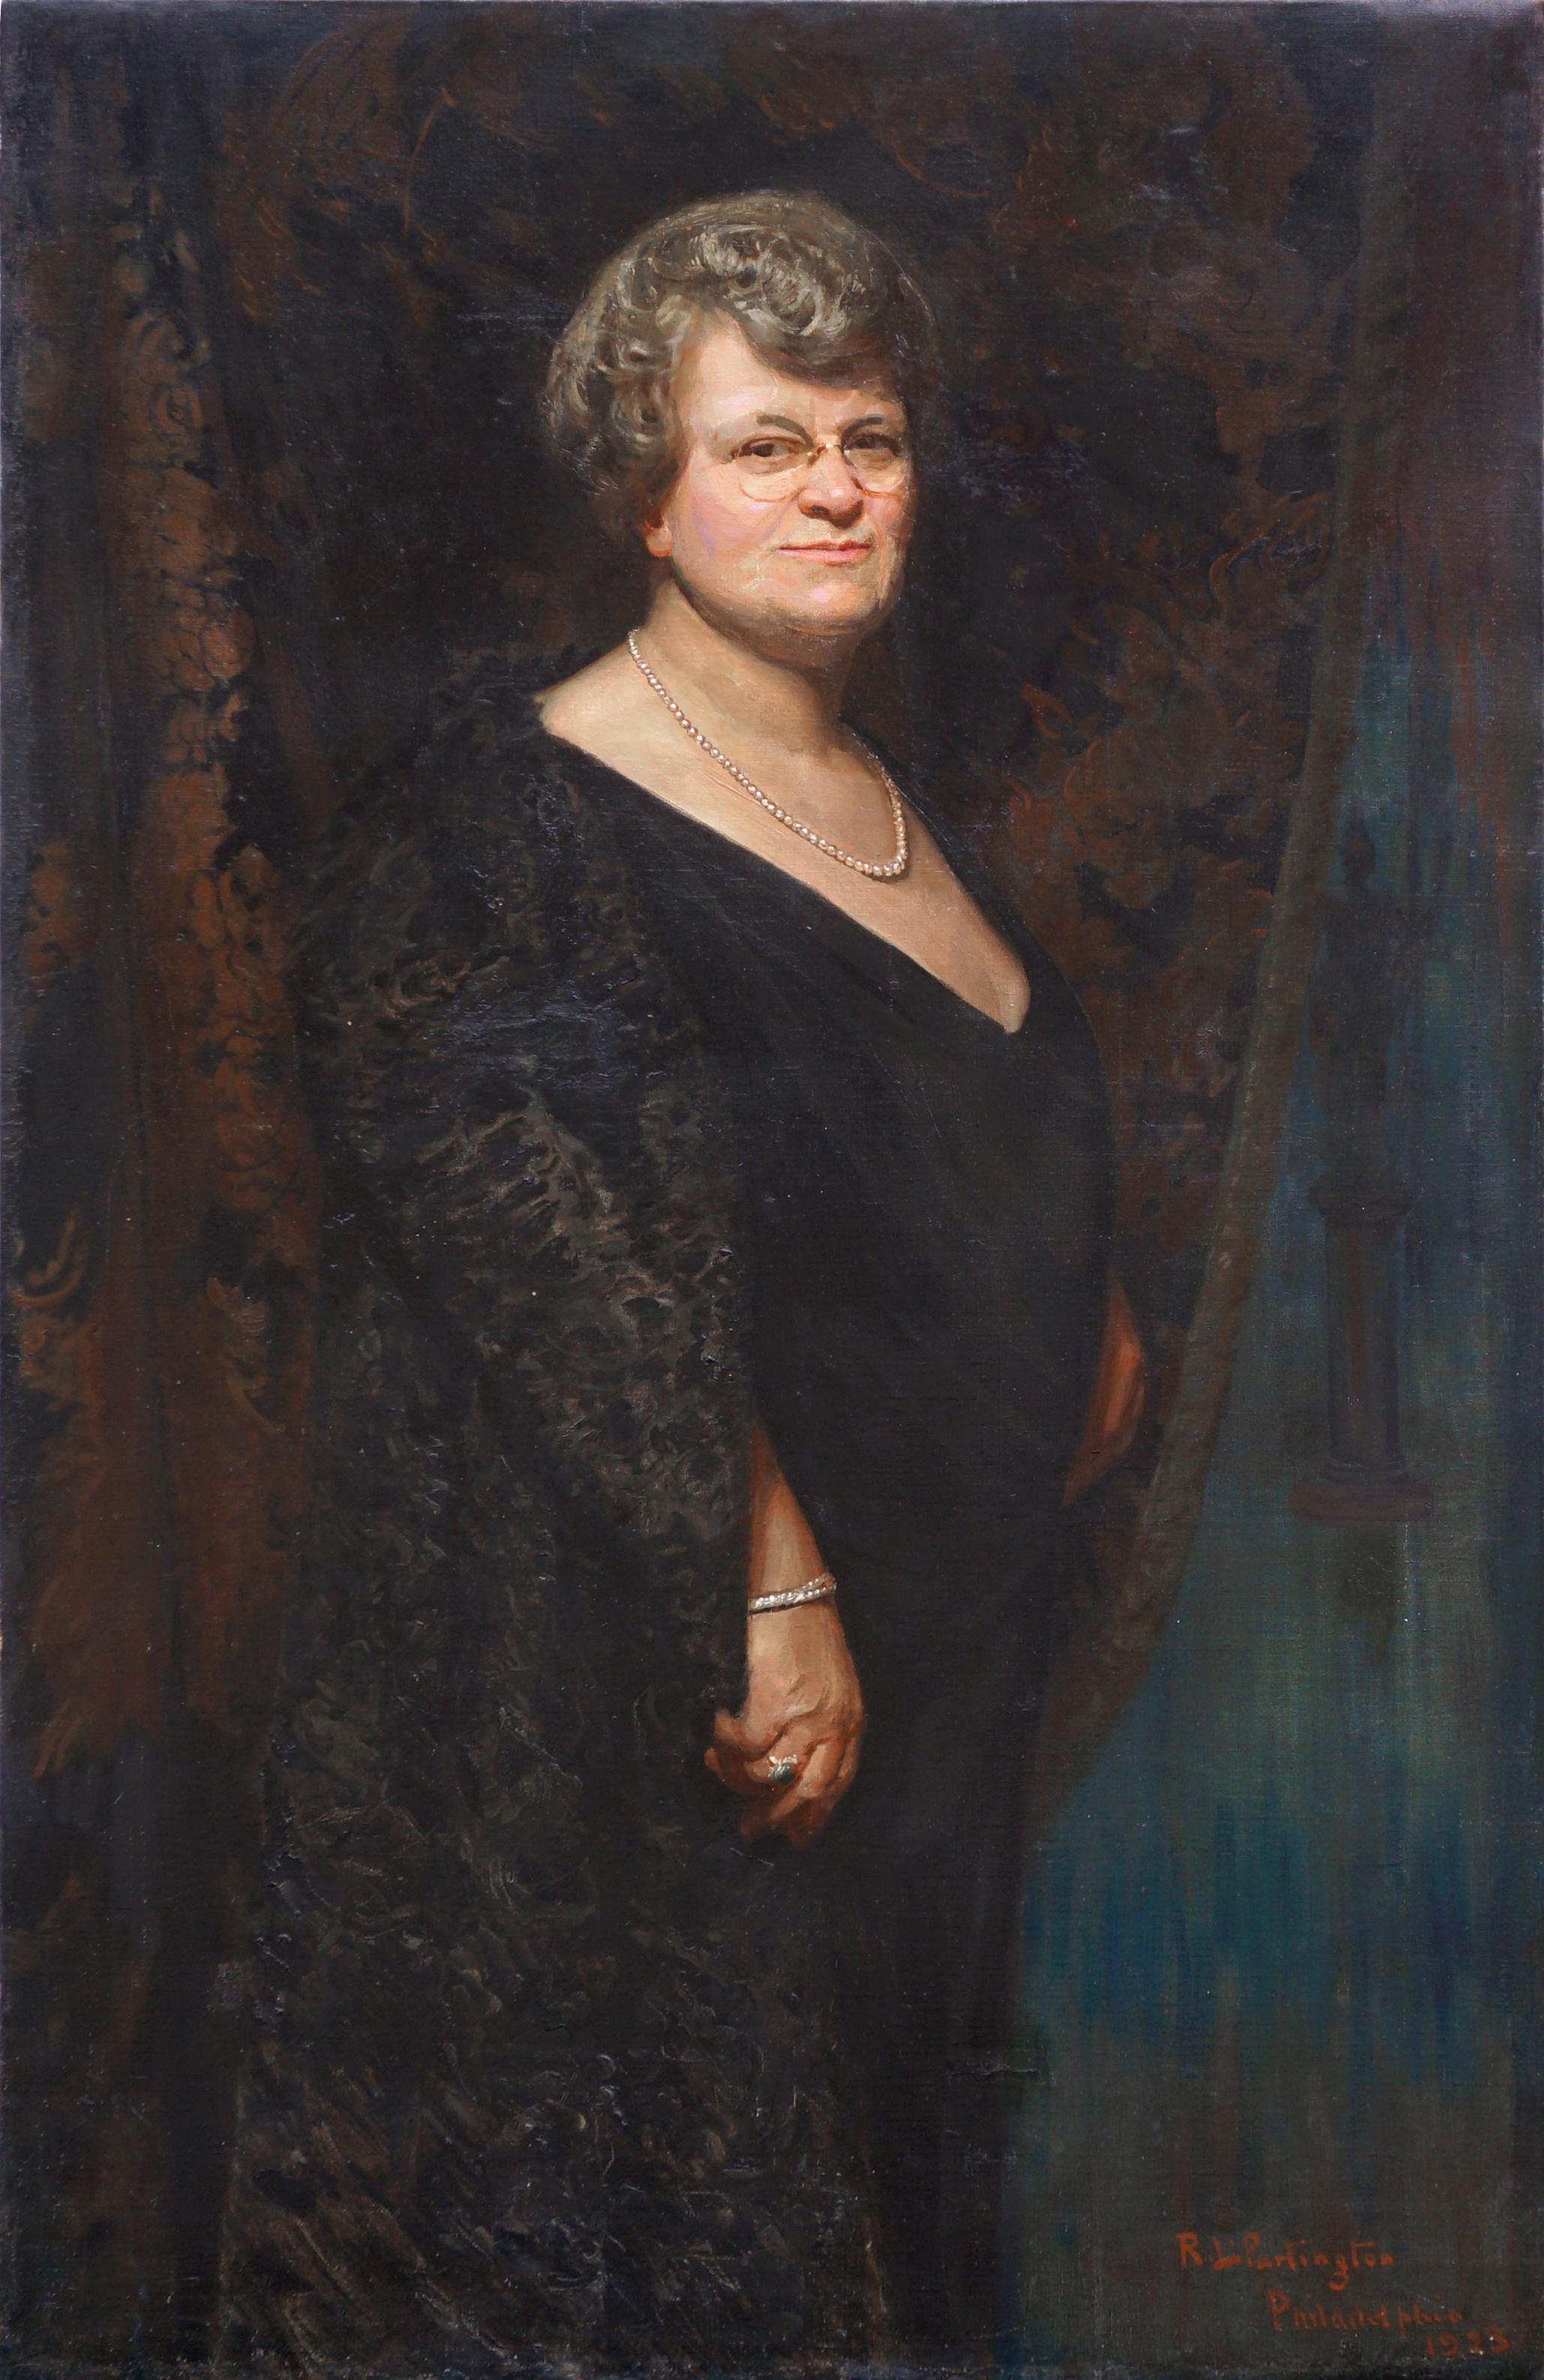 Richard Langtry Partington  Portrait Painting – Großes großformatiges Porträt von Florence Foster Jenkins, Amateur Soprano Singer, 1920er Jahre 